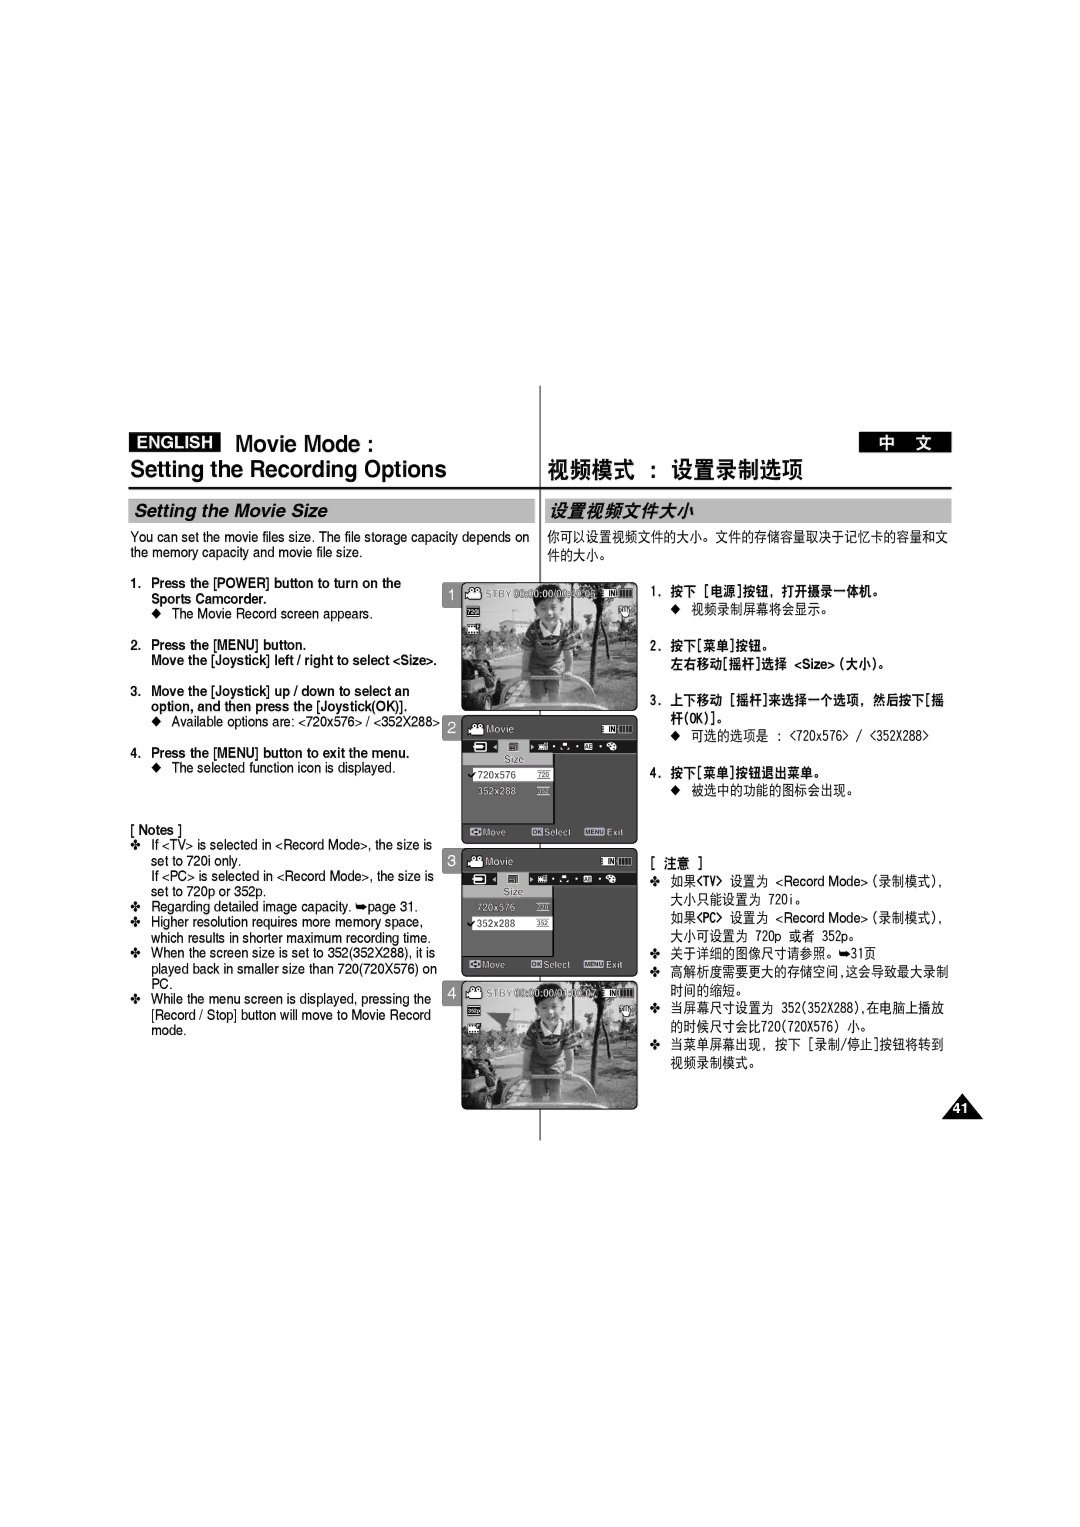 Samsung VP-X210L/CHN manual English Movie Mode Setting the Recording Options, 视频模式 设置录制选项, Setting the Movie Size, 设置视频文件大小 